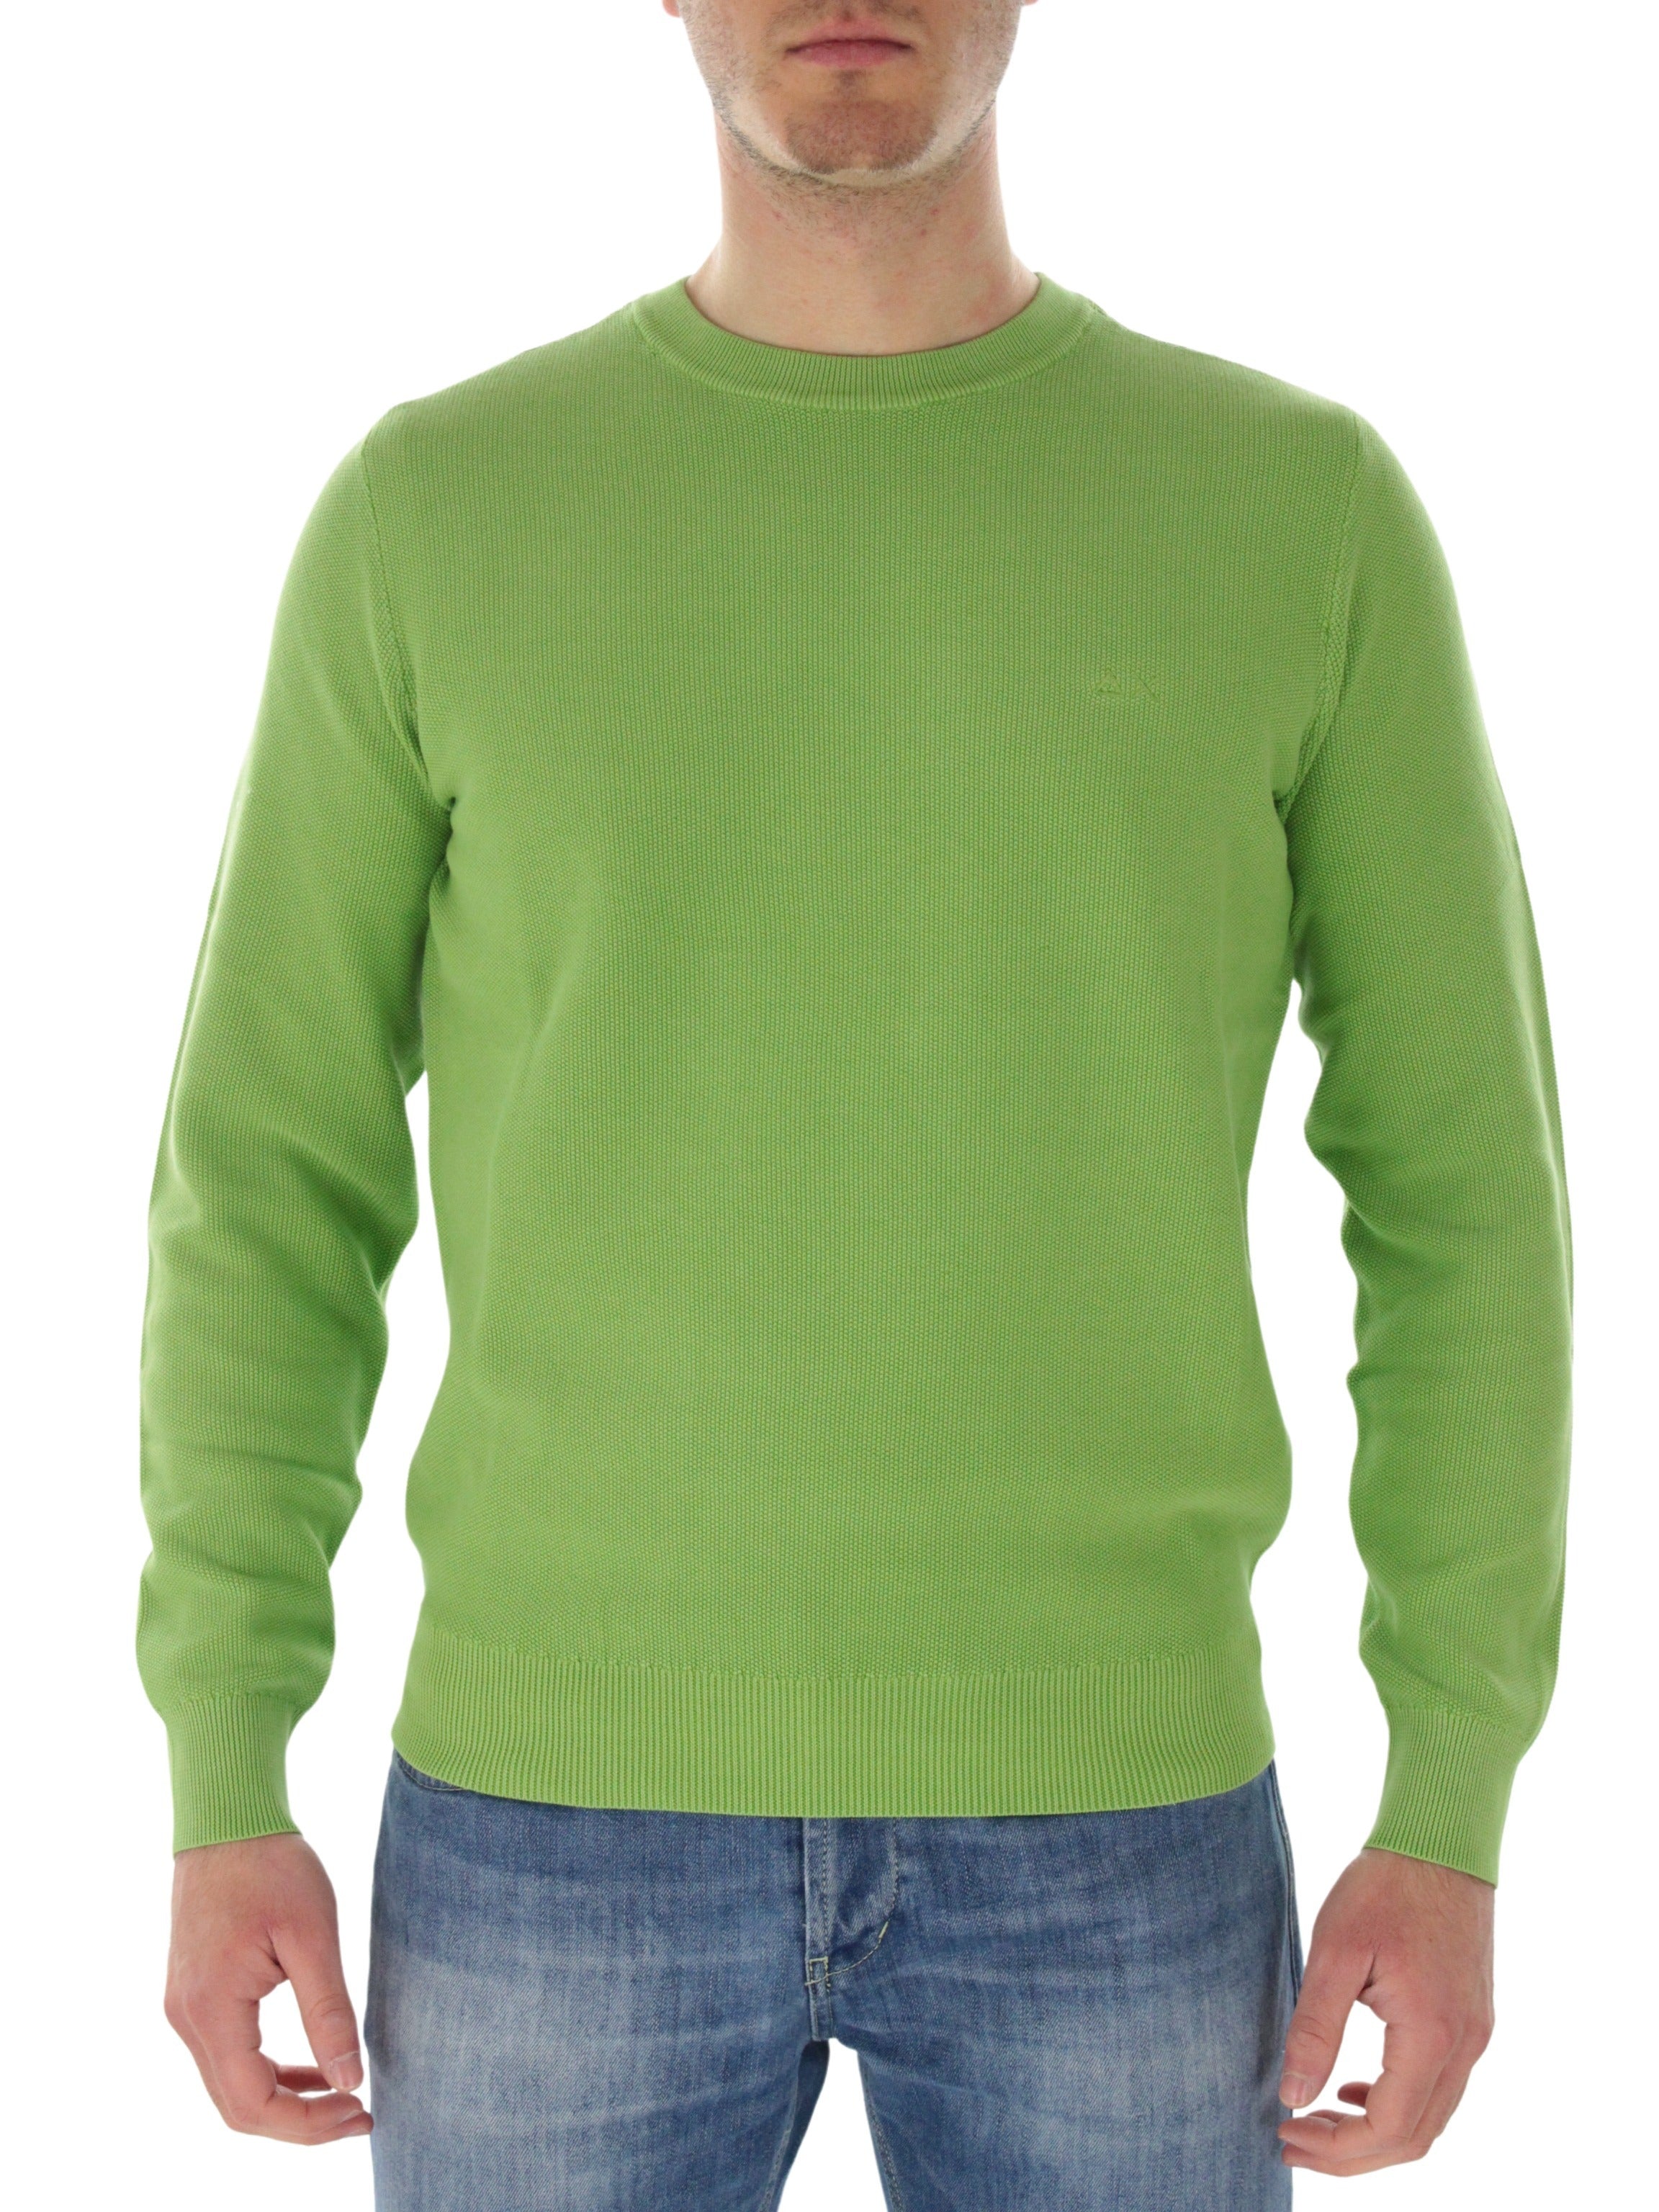 Vintage K33116 light green shirt light green